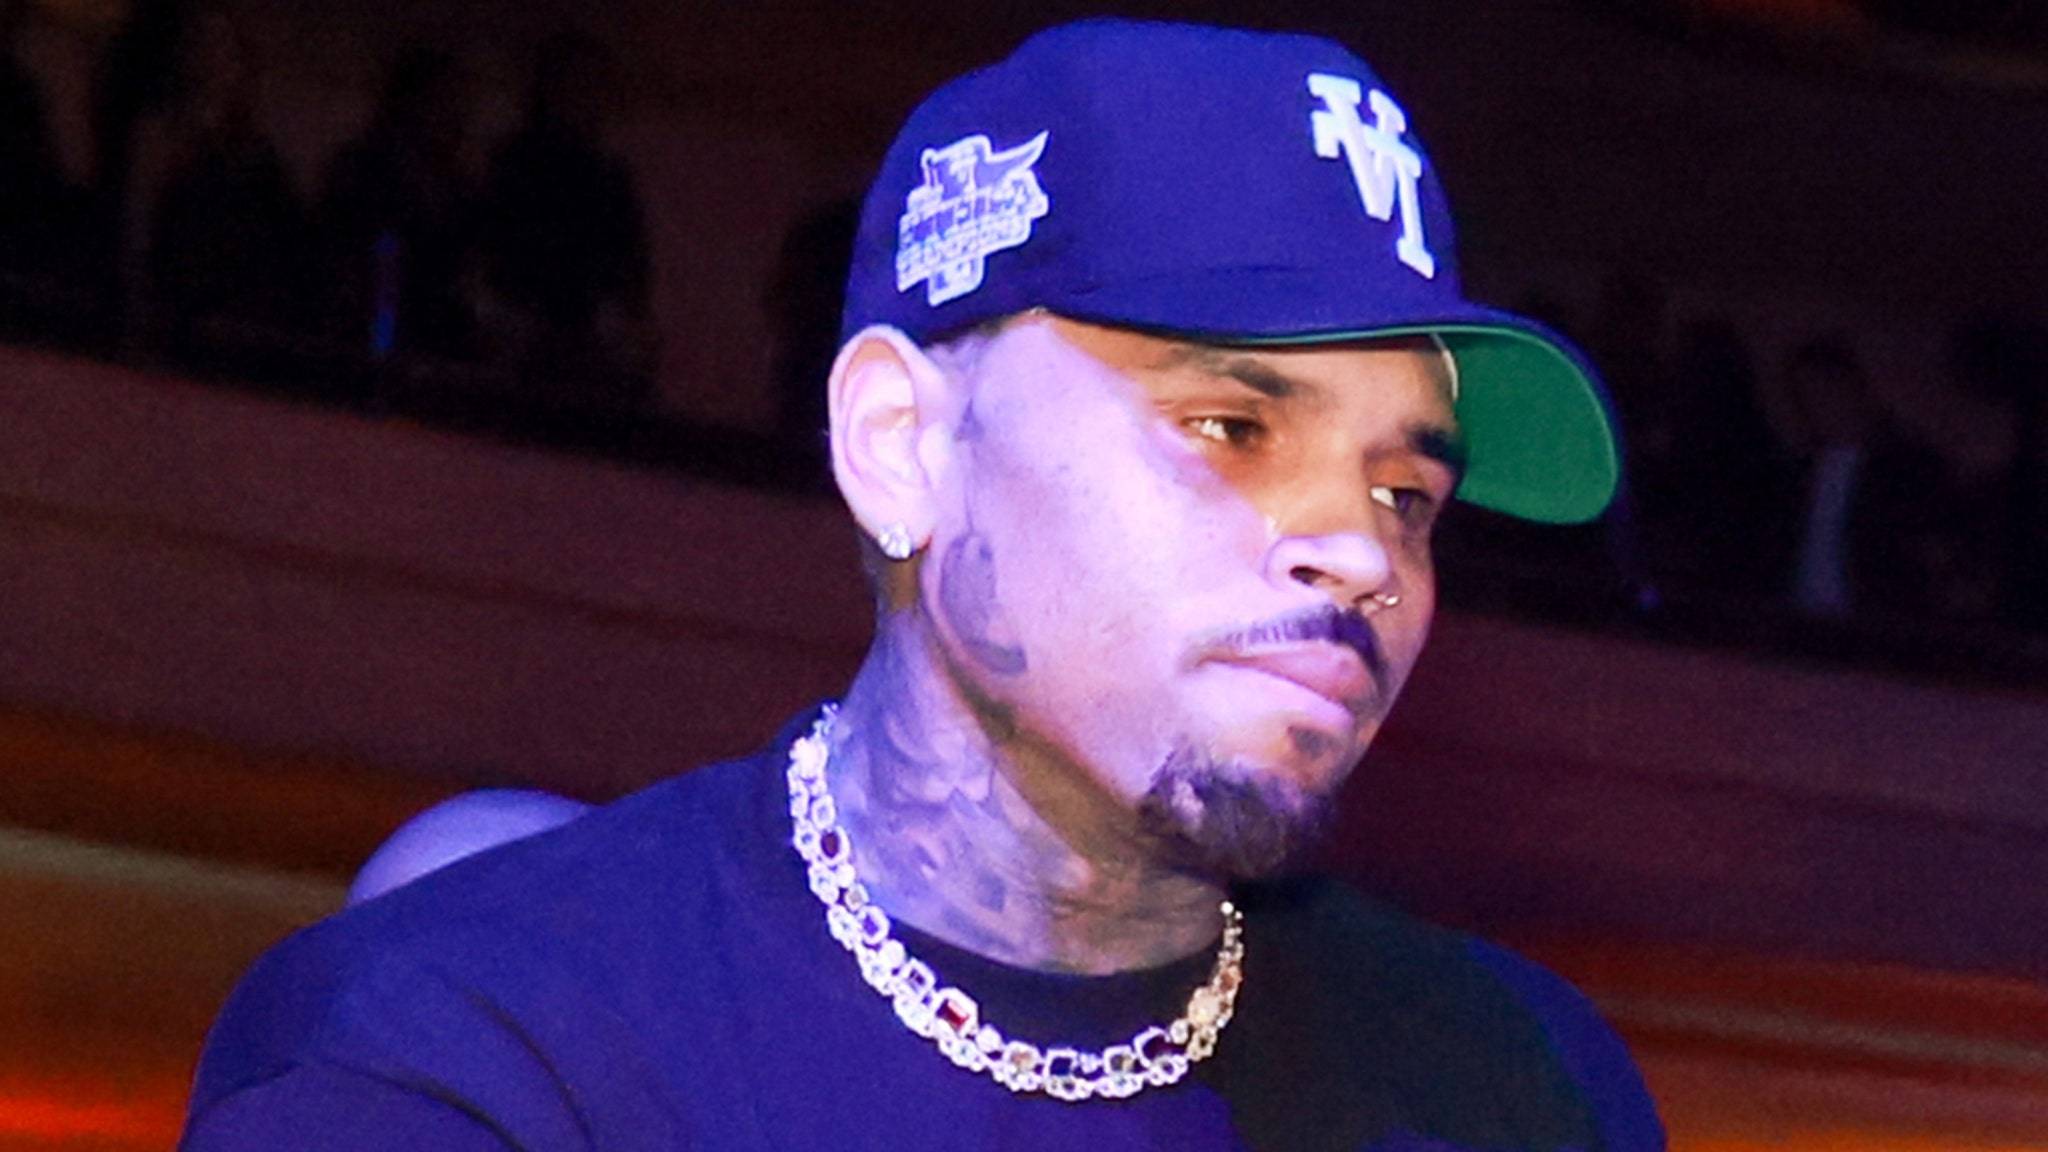 Chris Brown mocks Grammy winner after loss